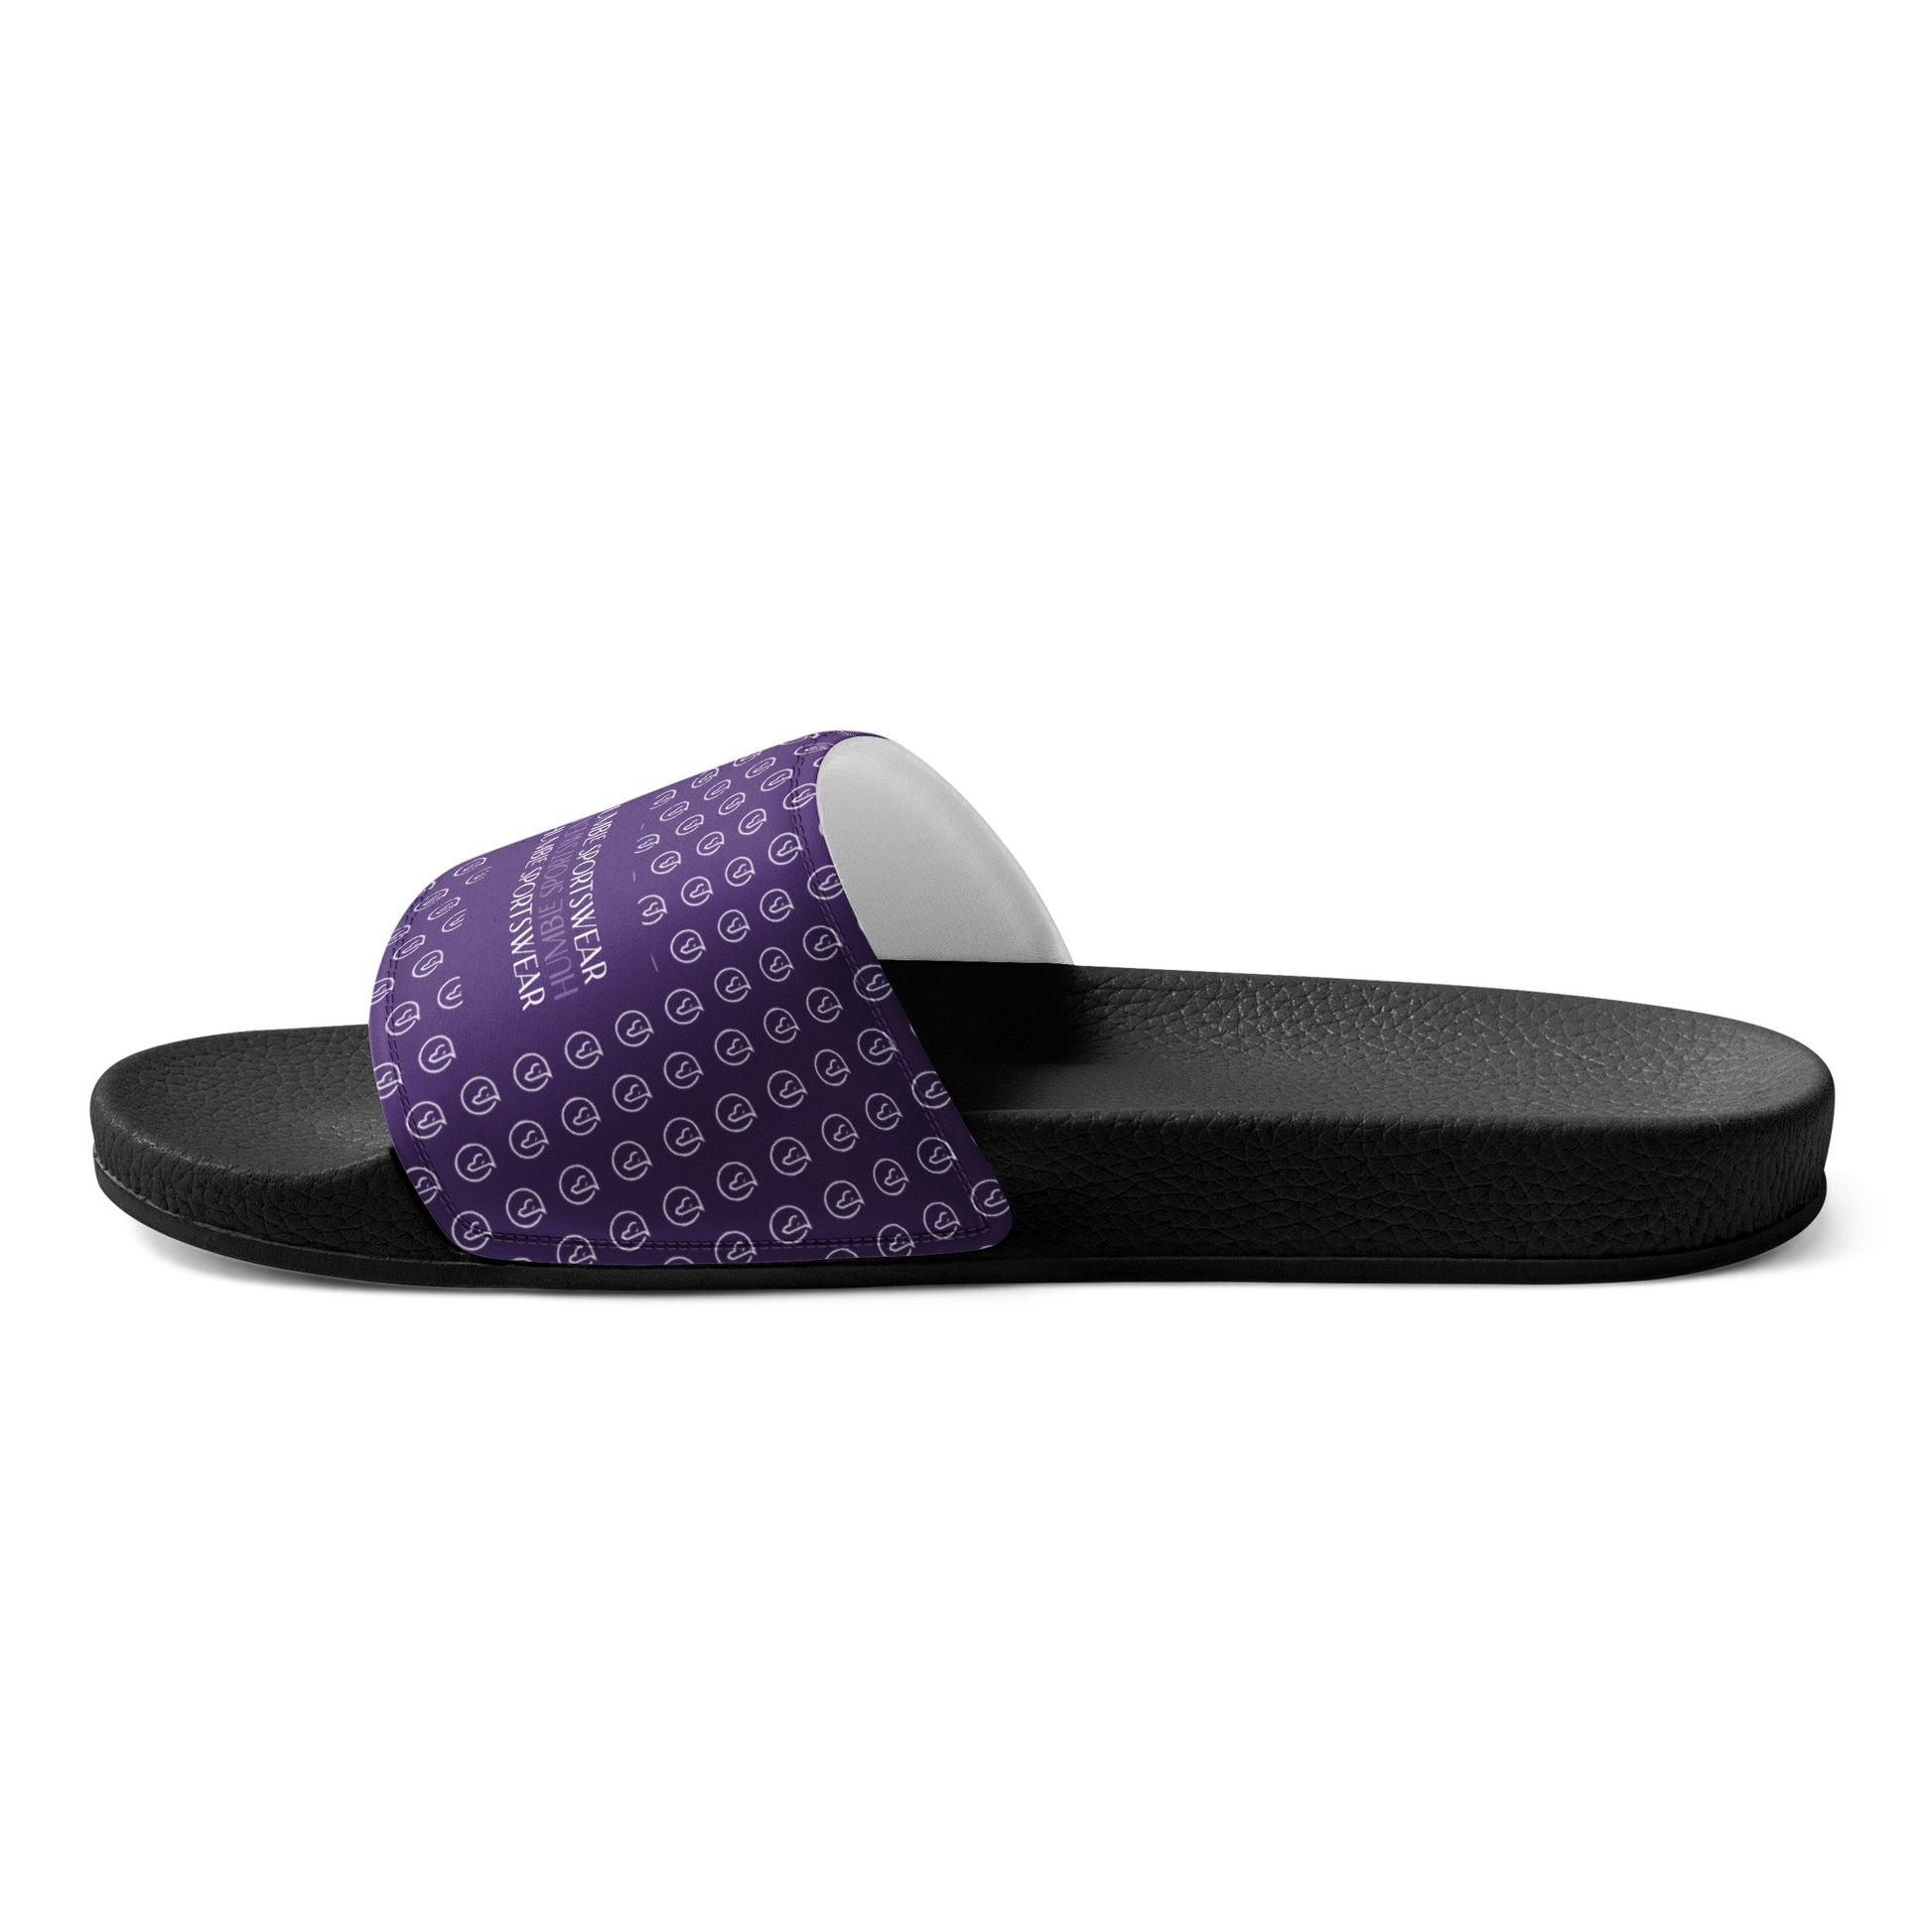 Humble Sportswear, men's casual slip on open toe Color Match purple slides sandals